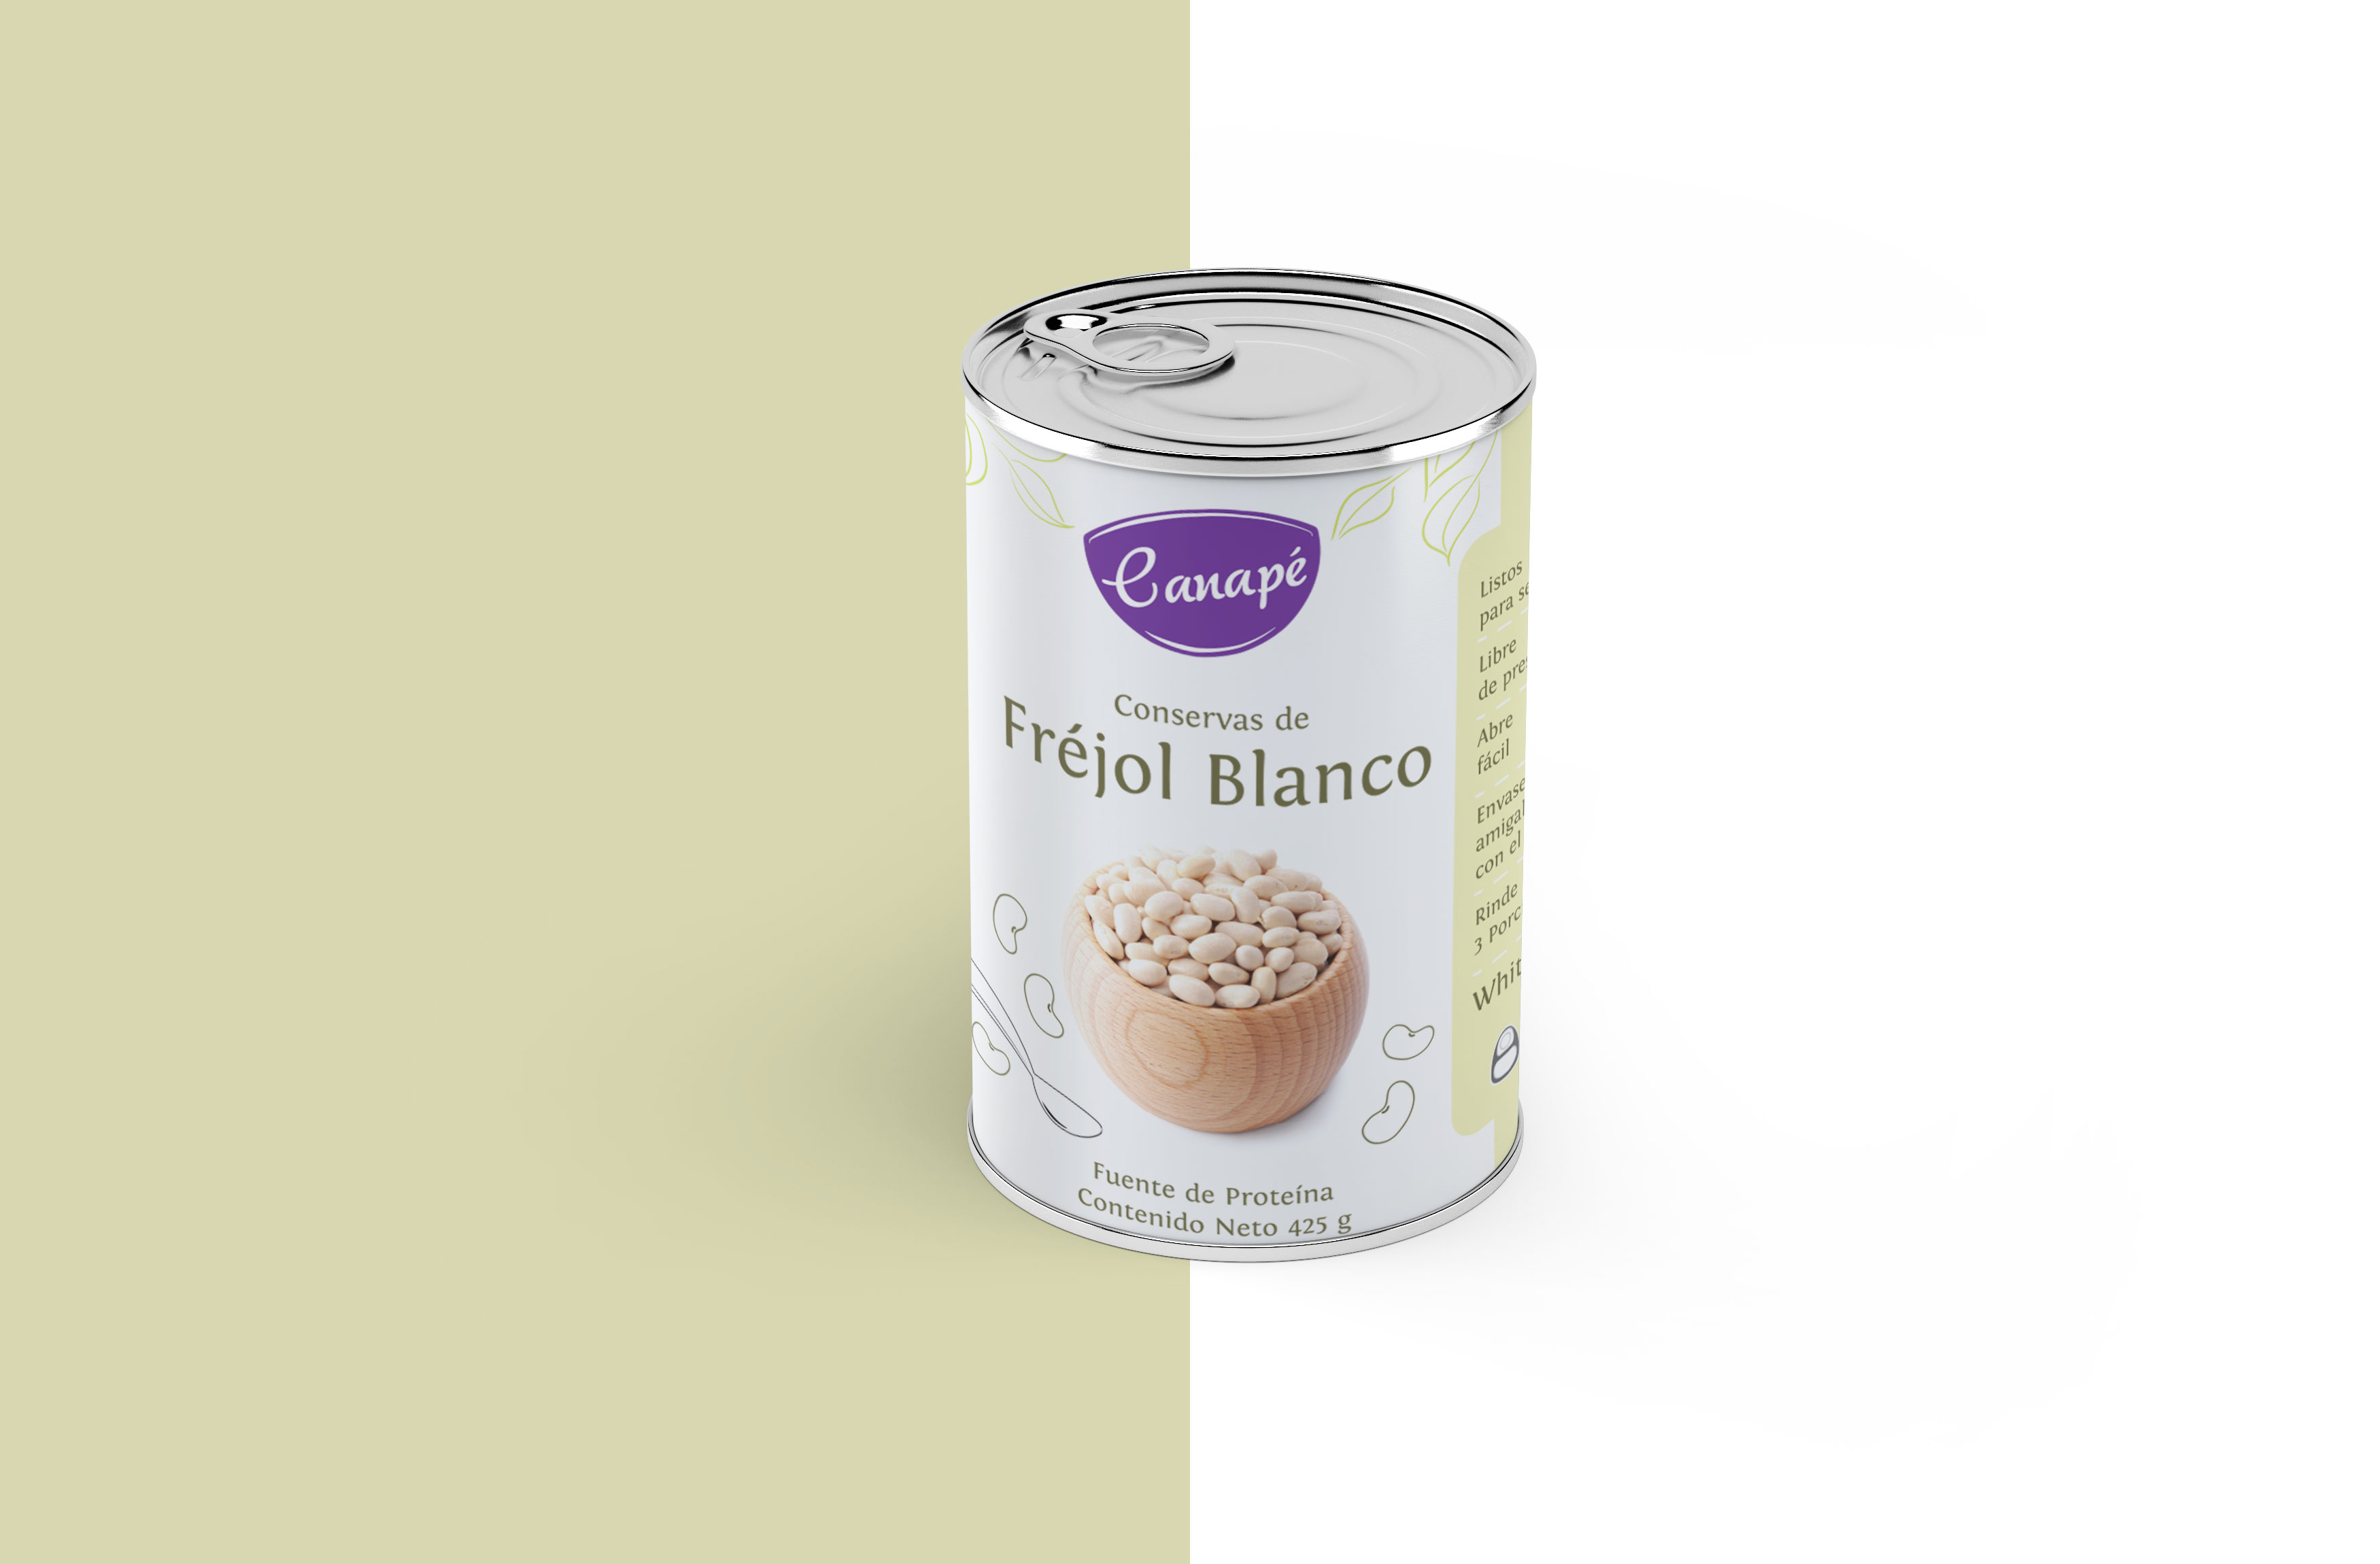 Label design - Canapé frejol blanco